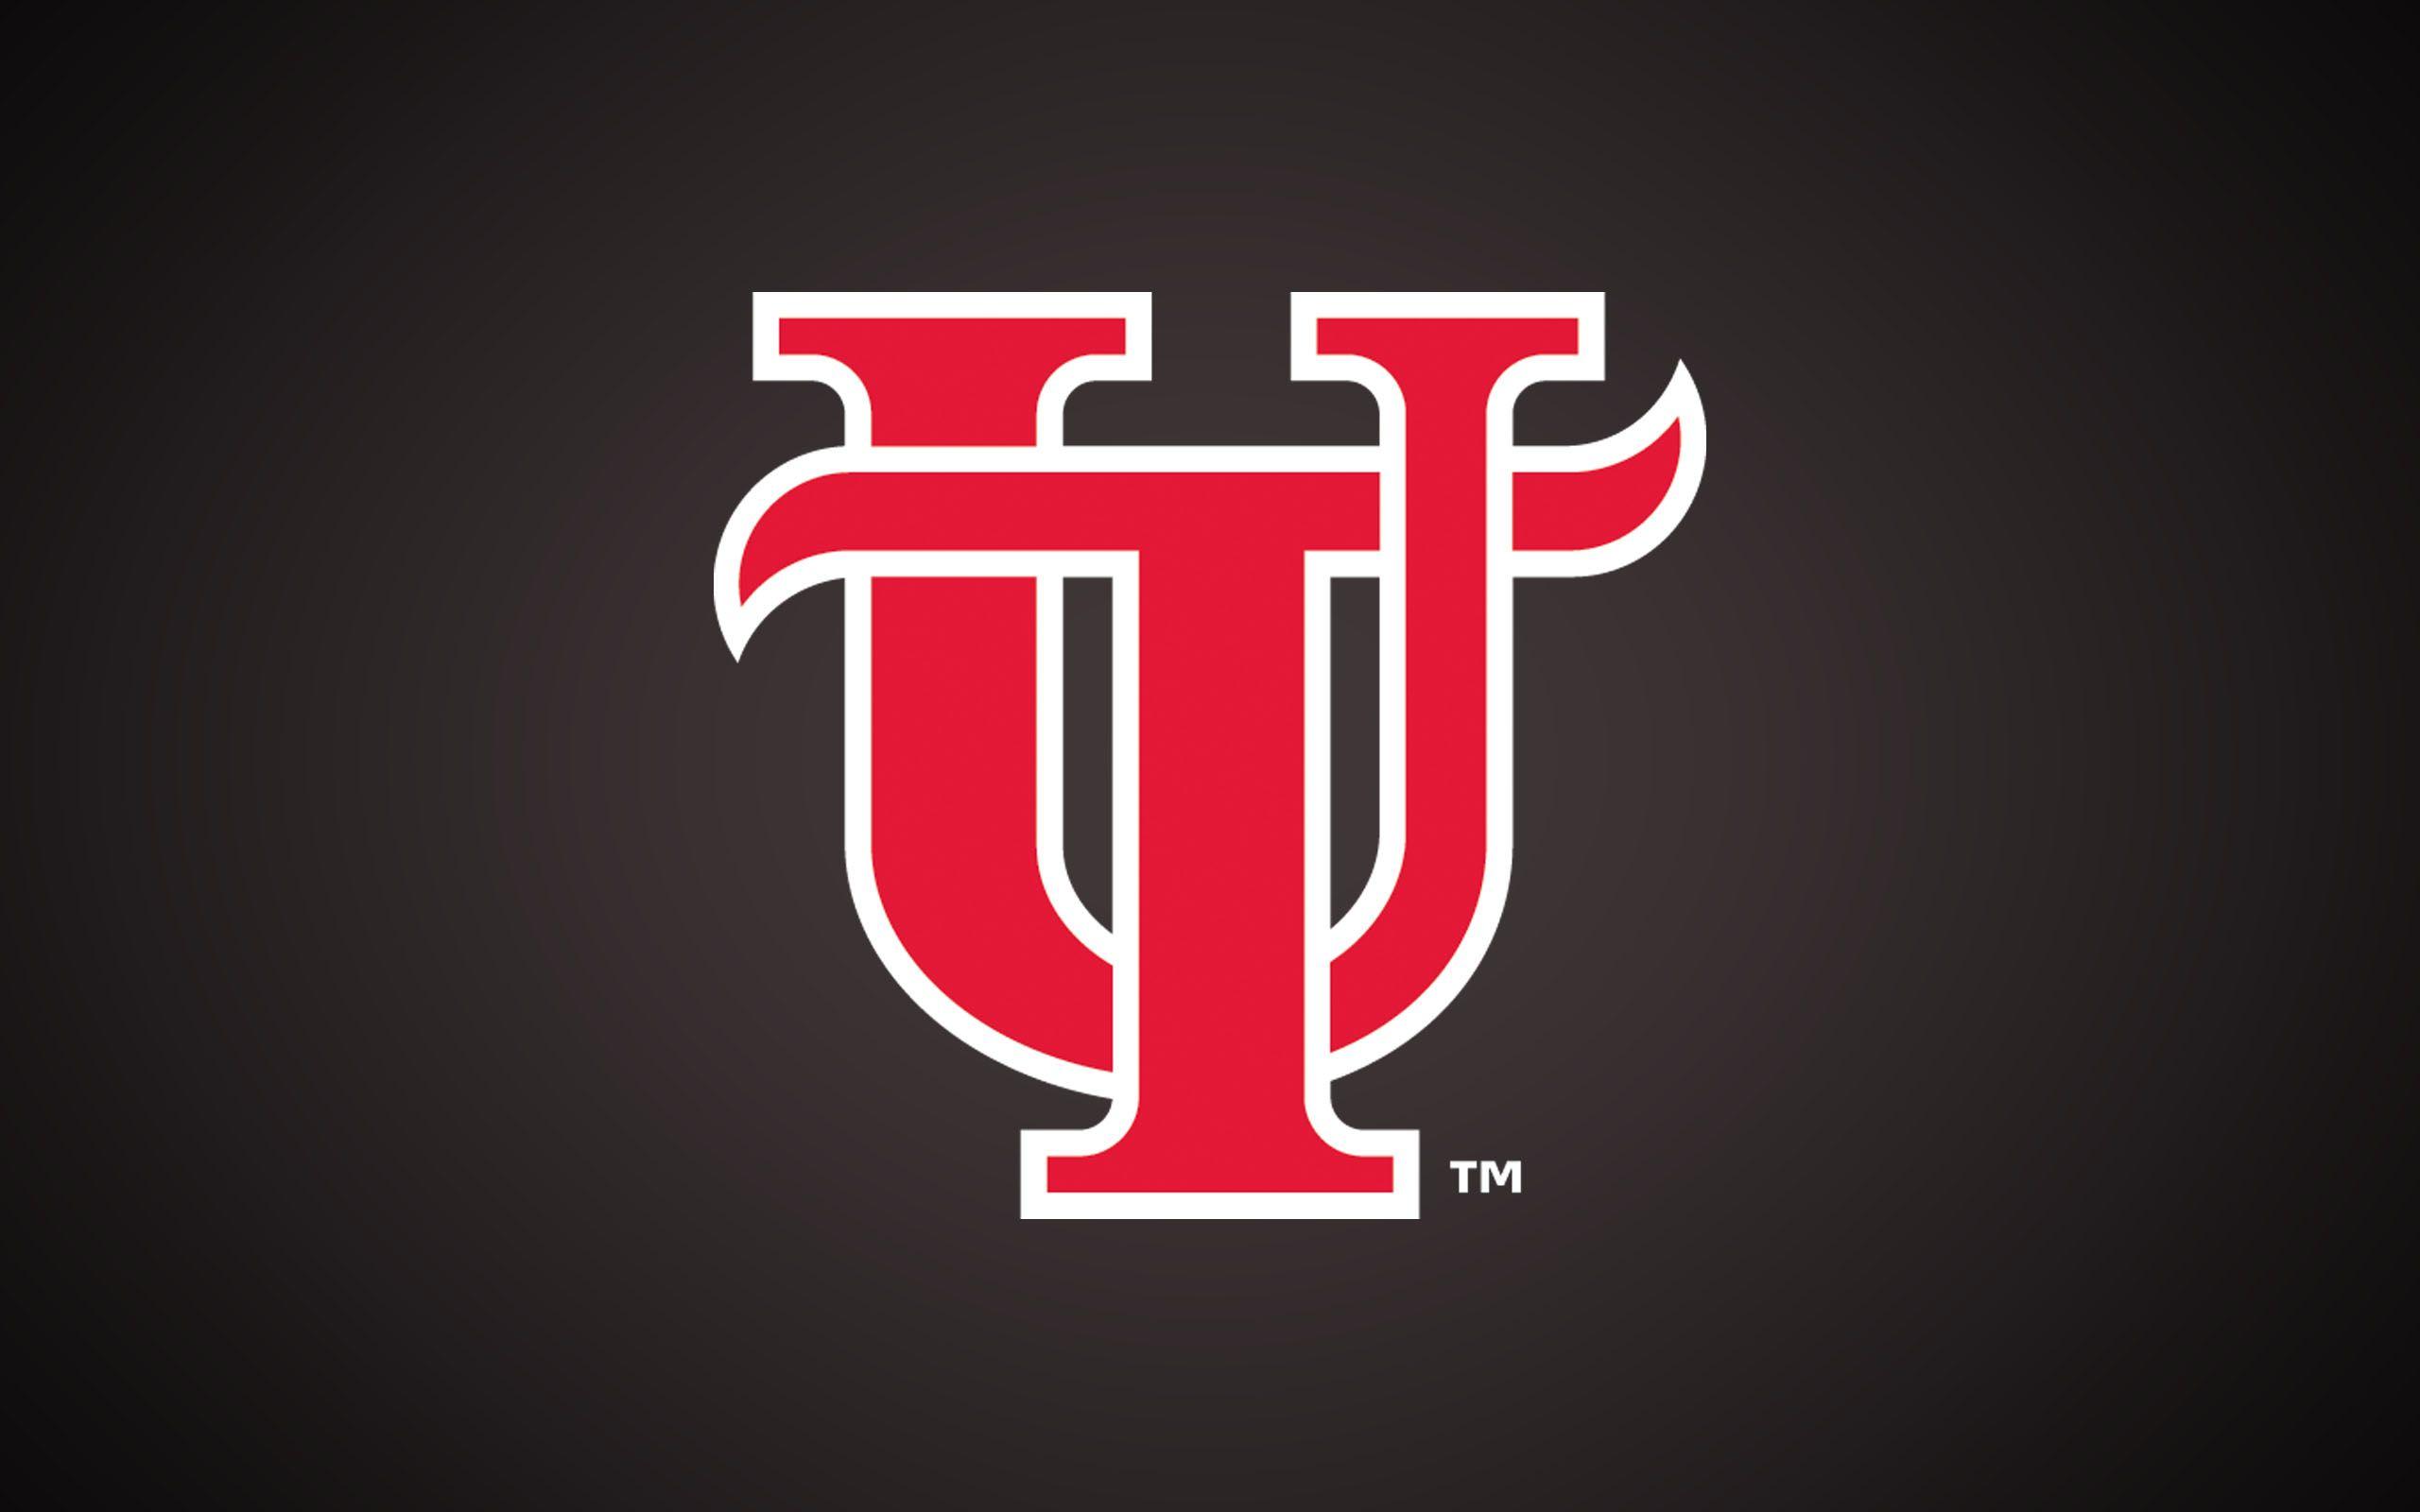 University of Tampa Logo - The University of Tampa